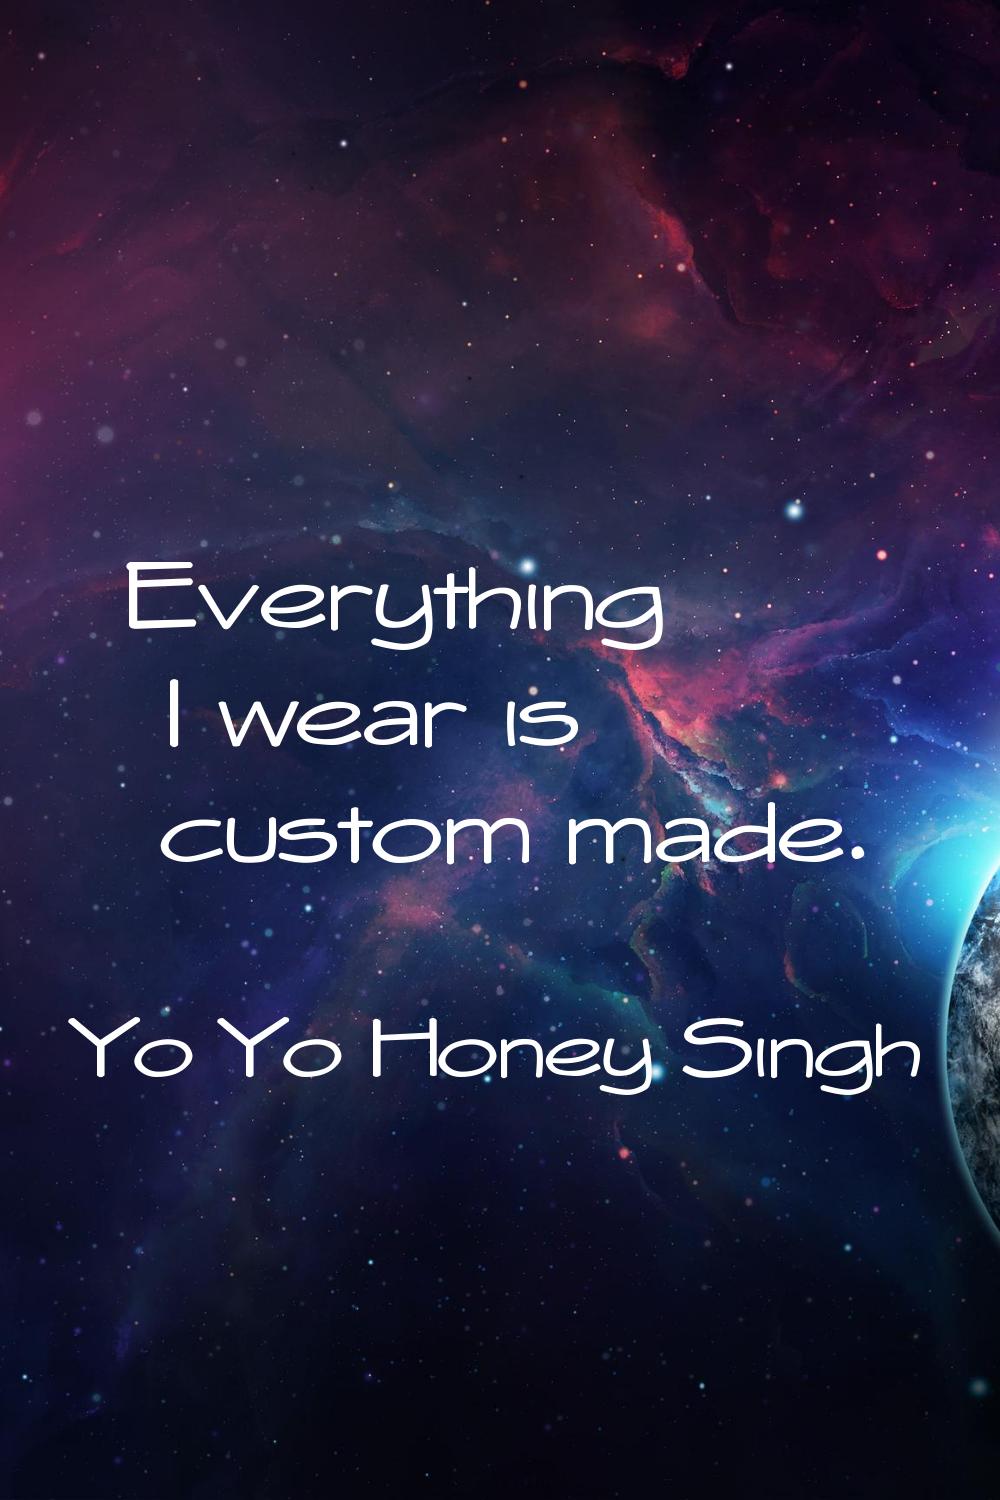 Everything I wear is custom made.